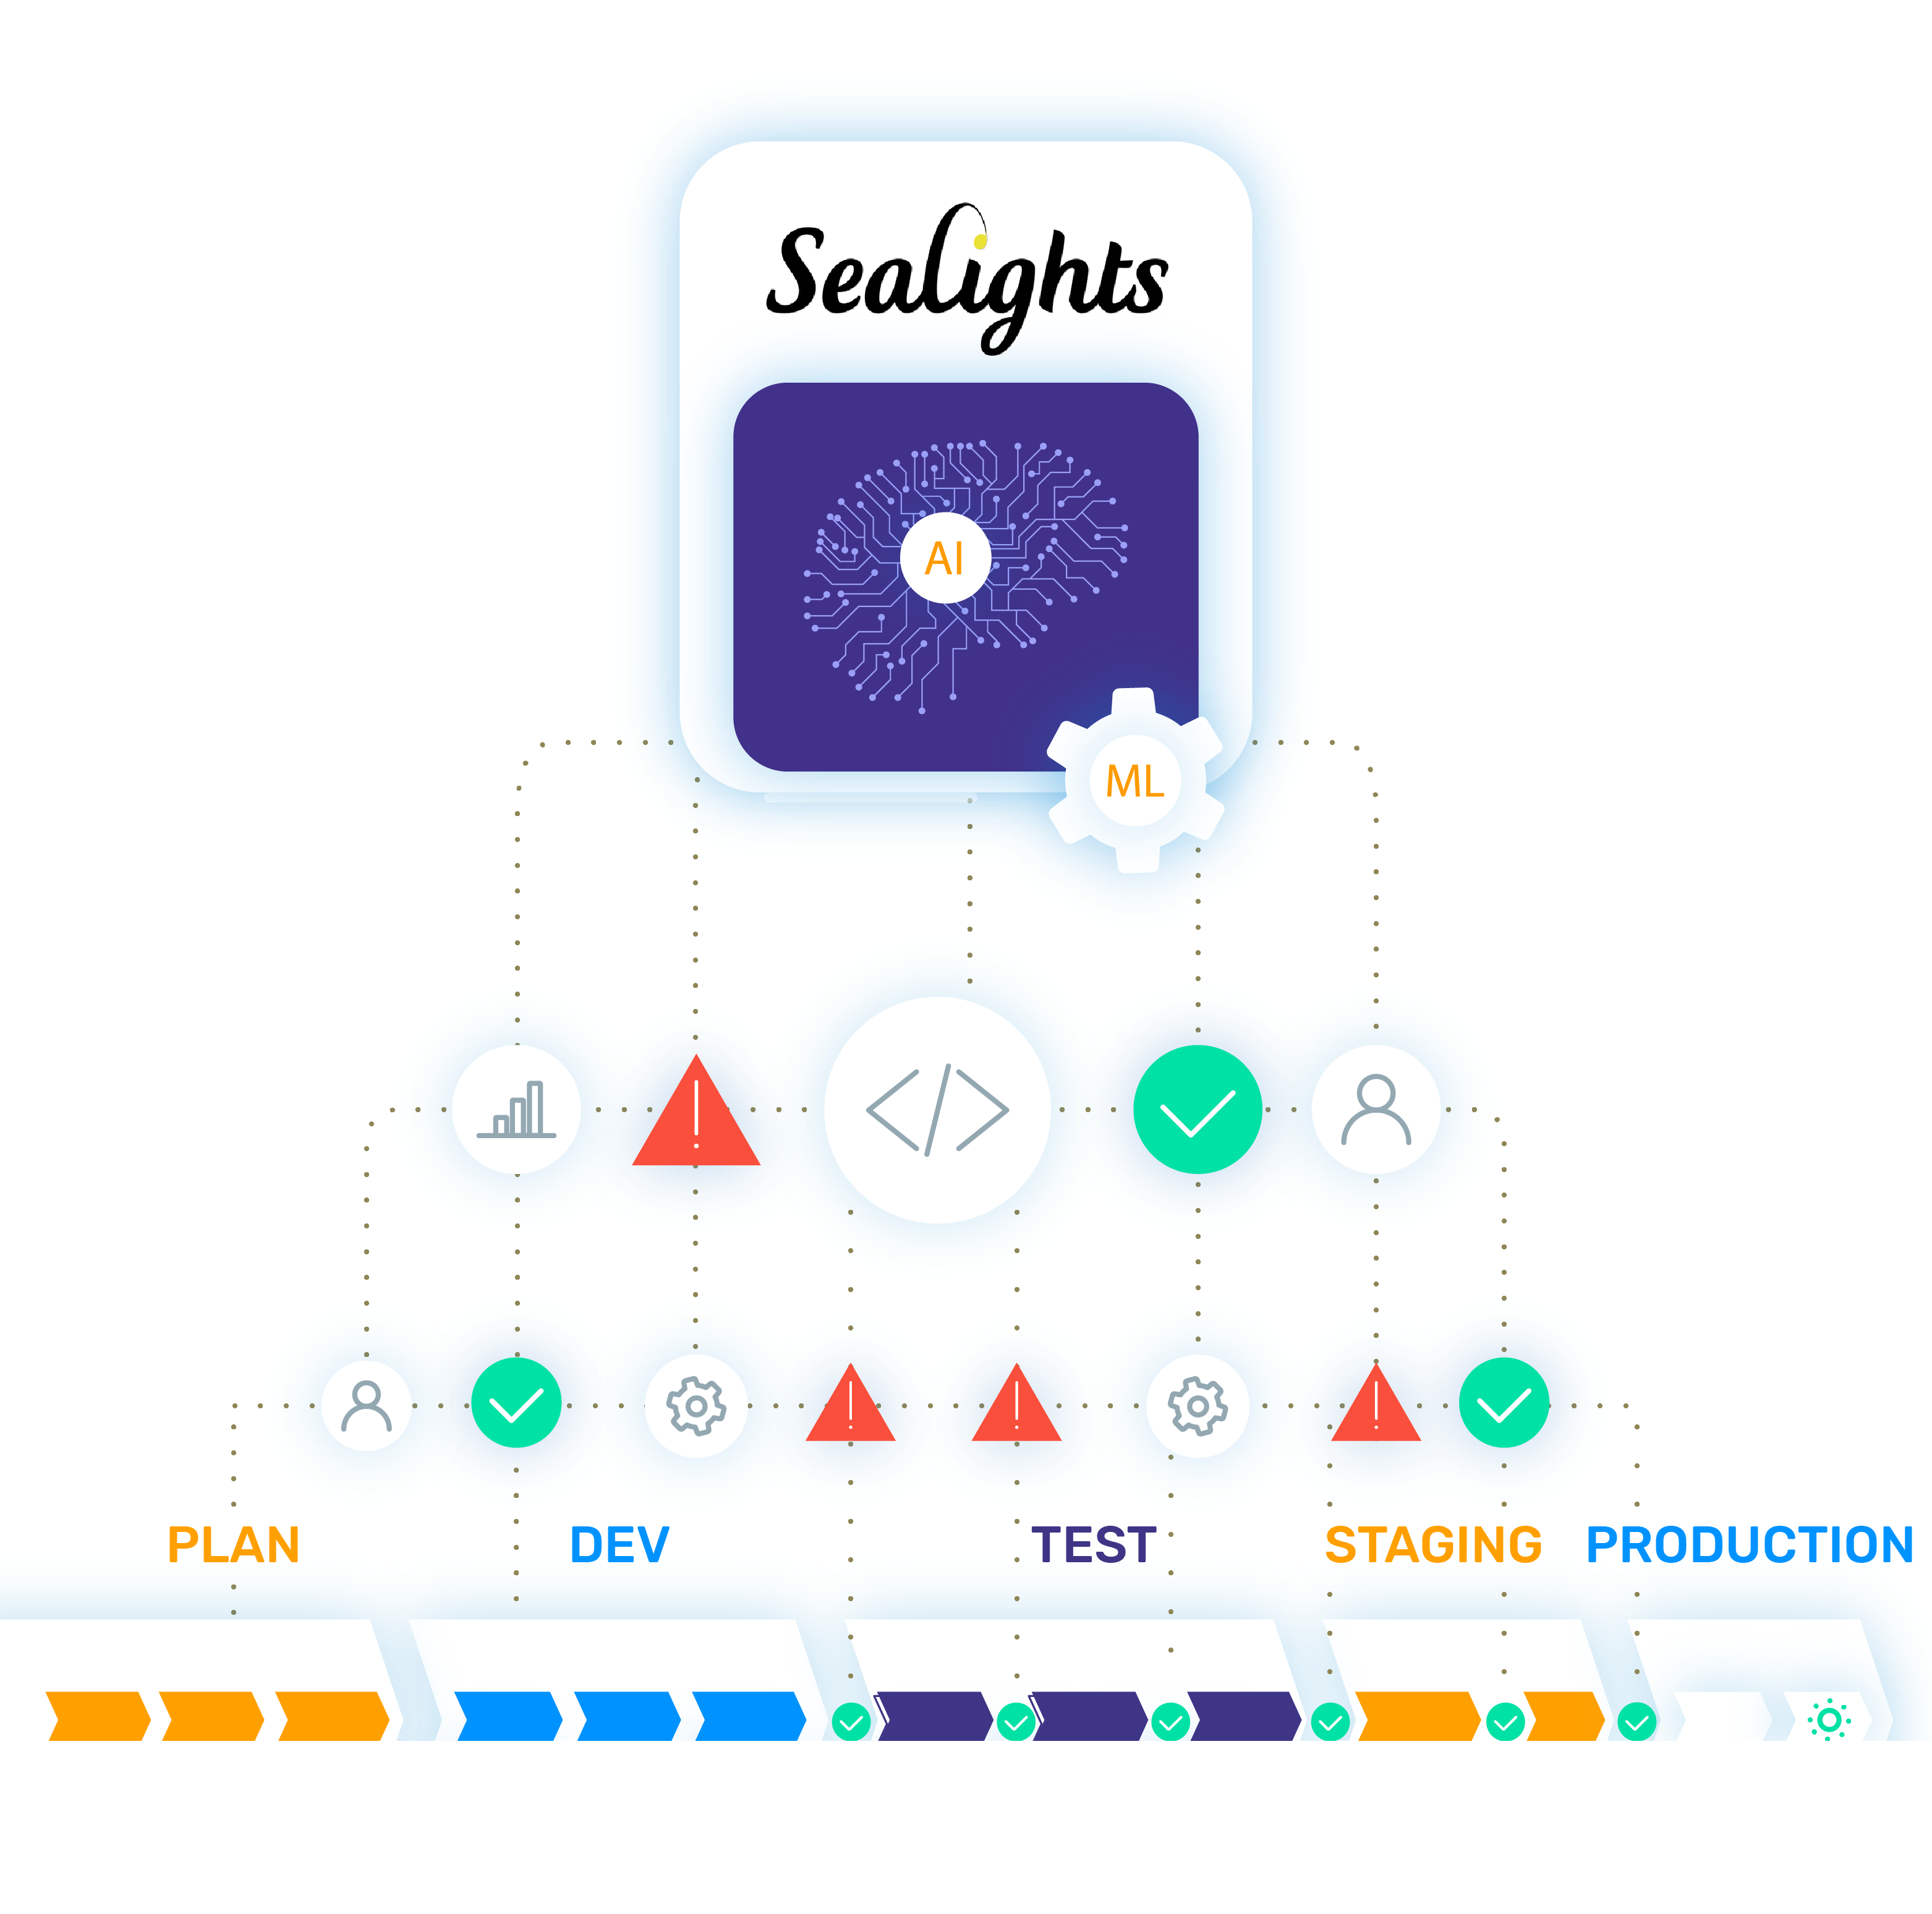 The SeaLights Software Quality Governance Platform